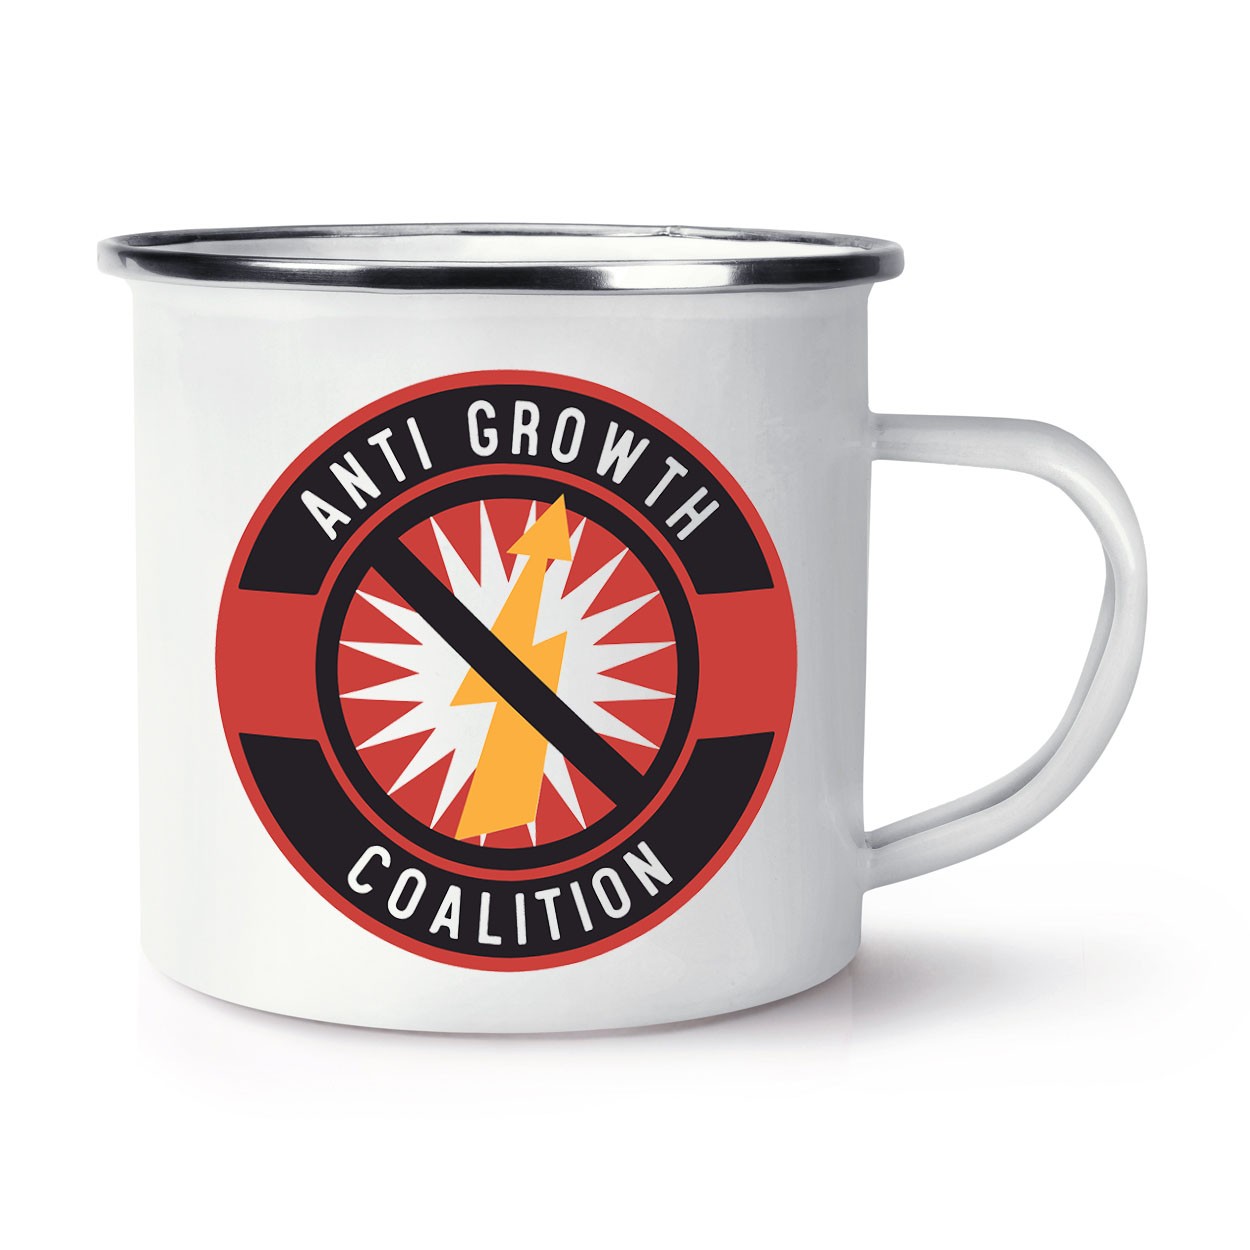 Anti Growth Coalition Enamel Mug Cup